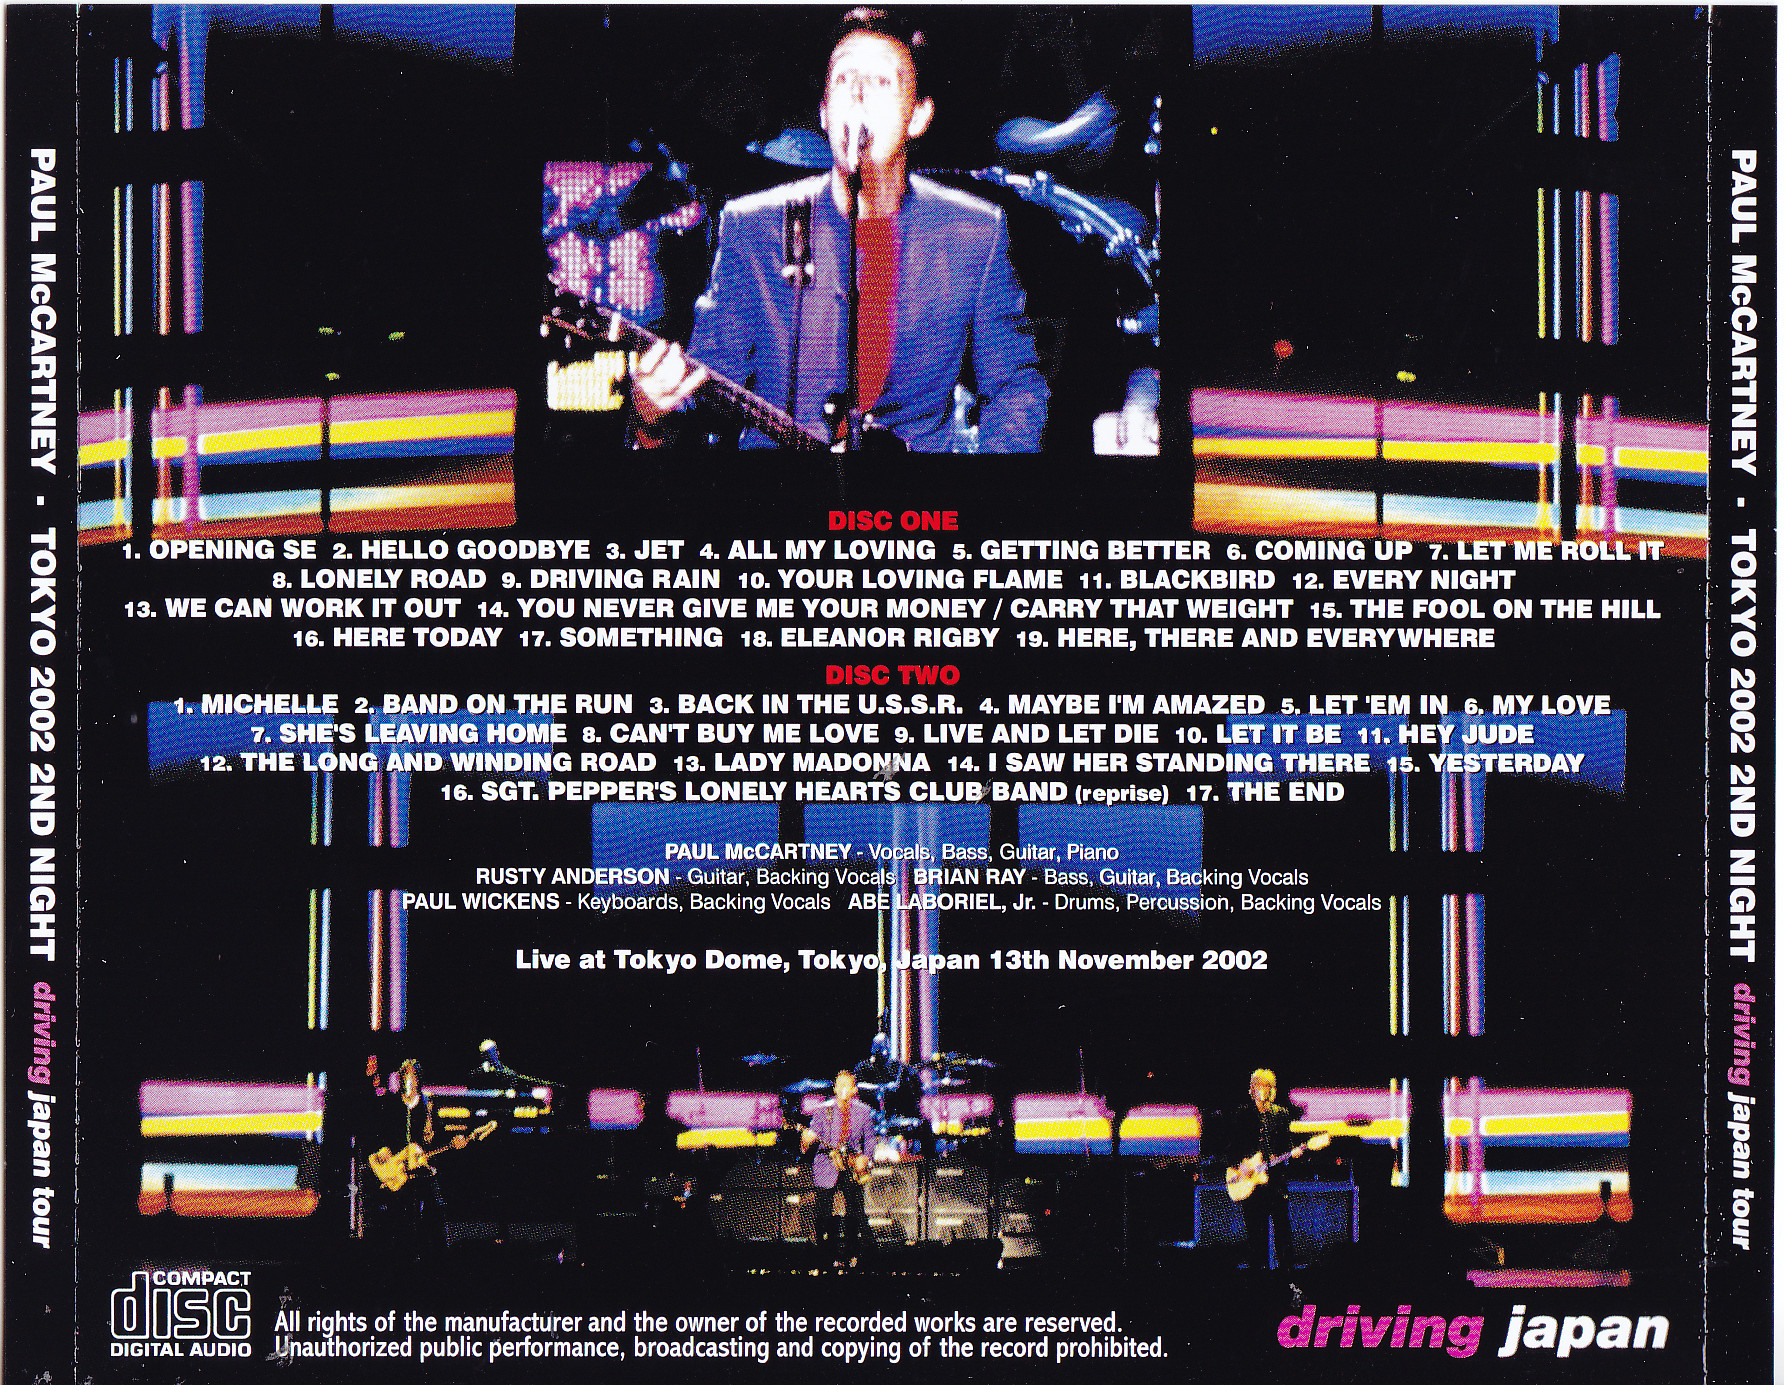 Paul McCartney / Tokyo 2002 2nd Night Driving Japan Tour / 2CD – GiGinJapan